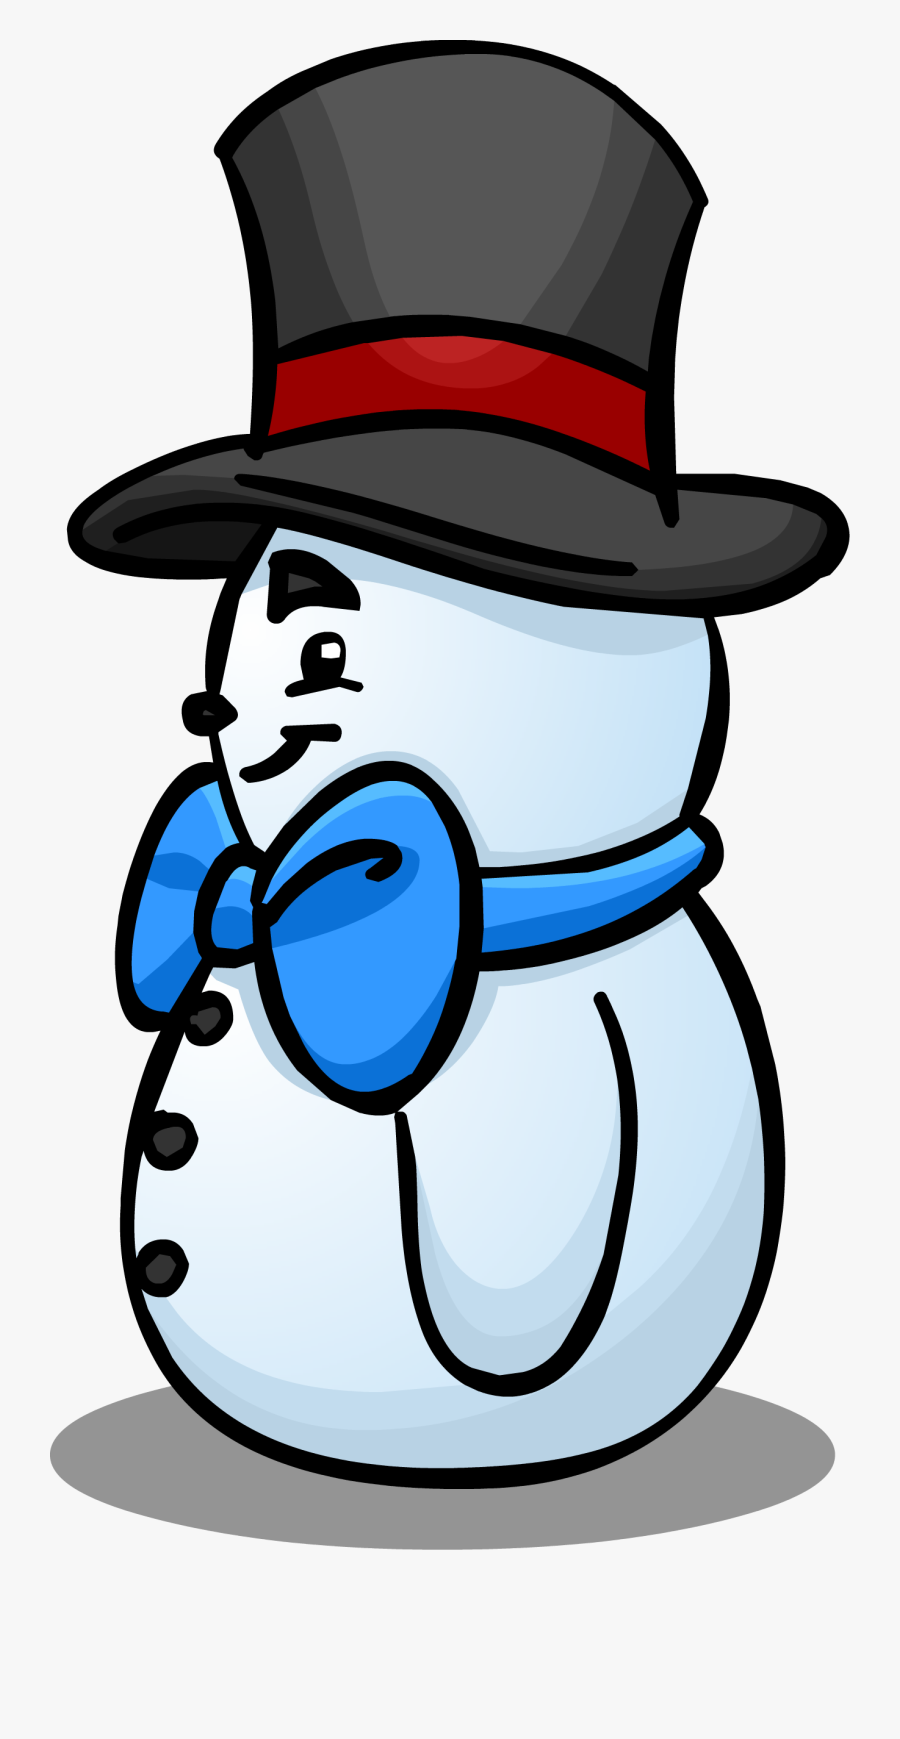 Jpg Transparent Stock Image Top Hat Snowman Sprite, Transparent Clipart